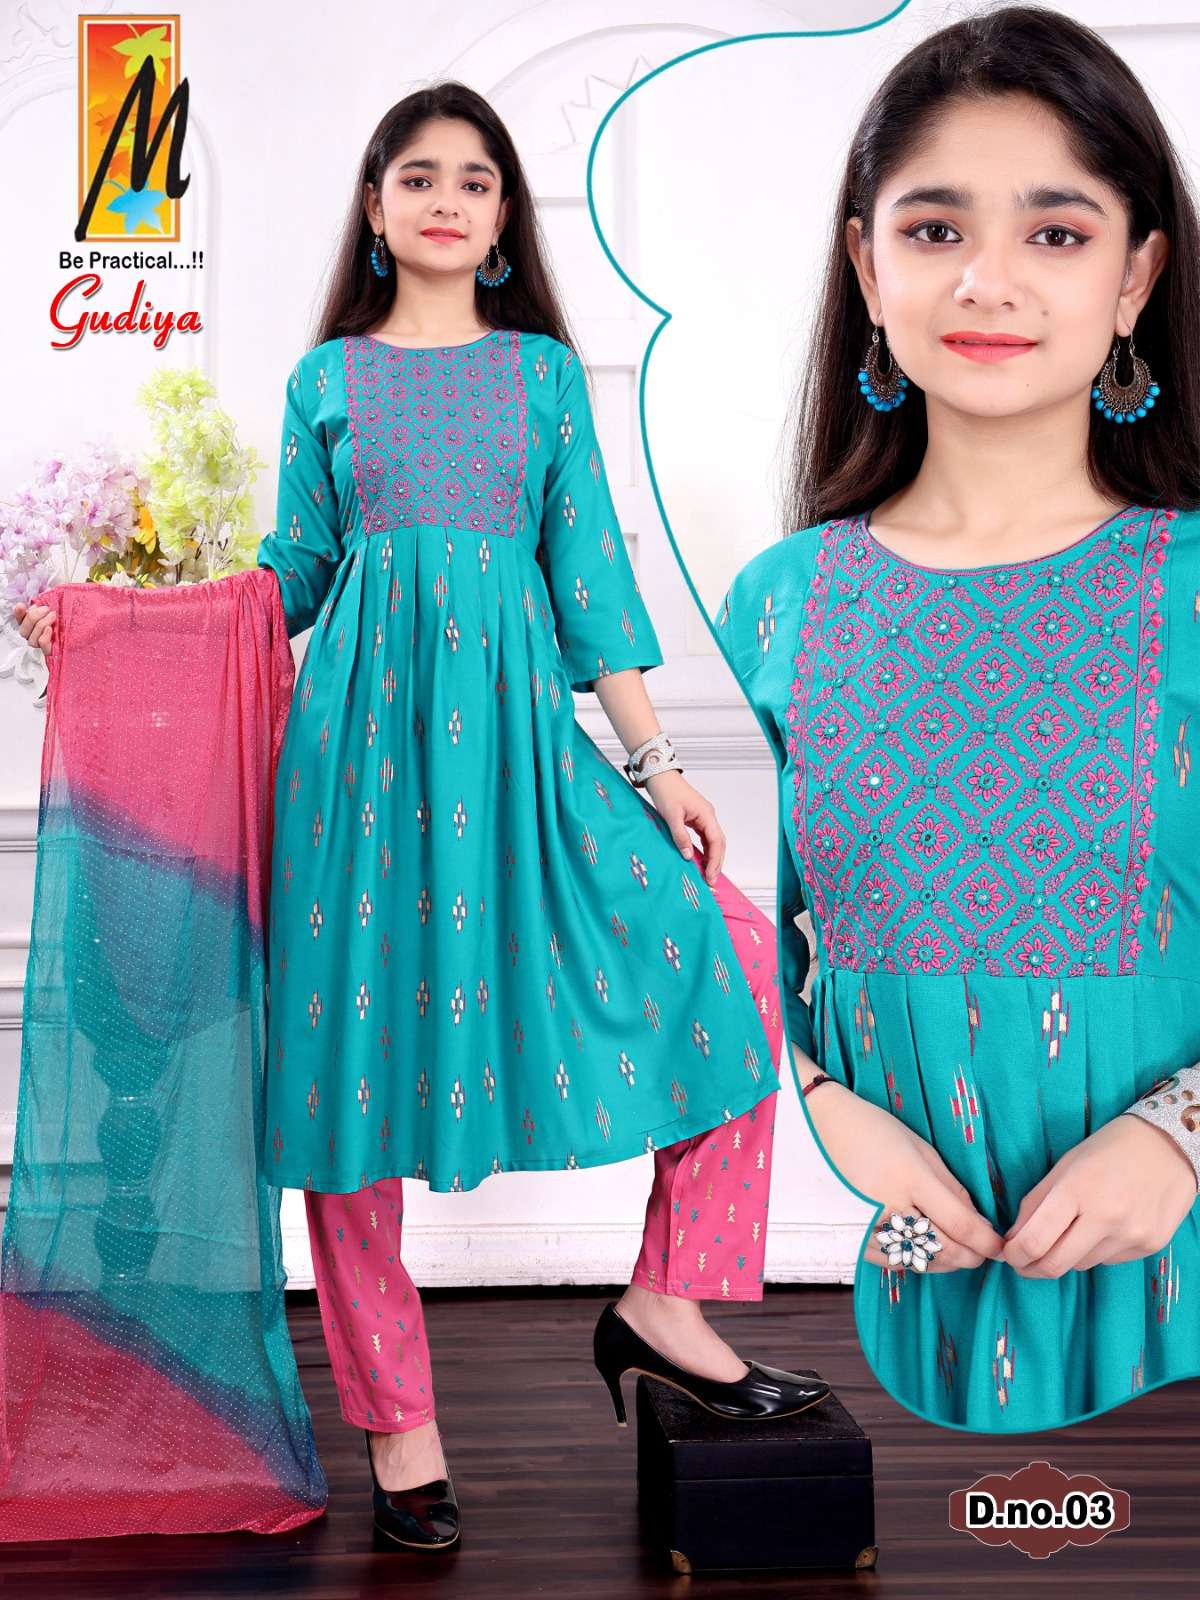 Gudiya Buy Wholesale Designer Kids Wear